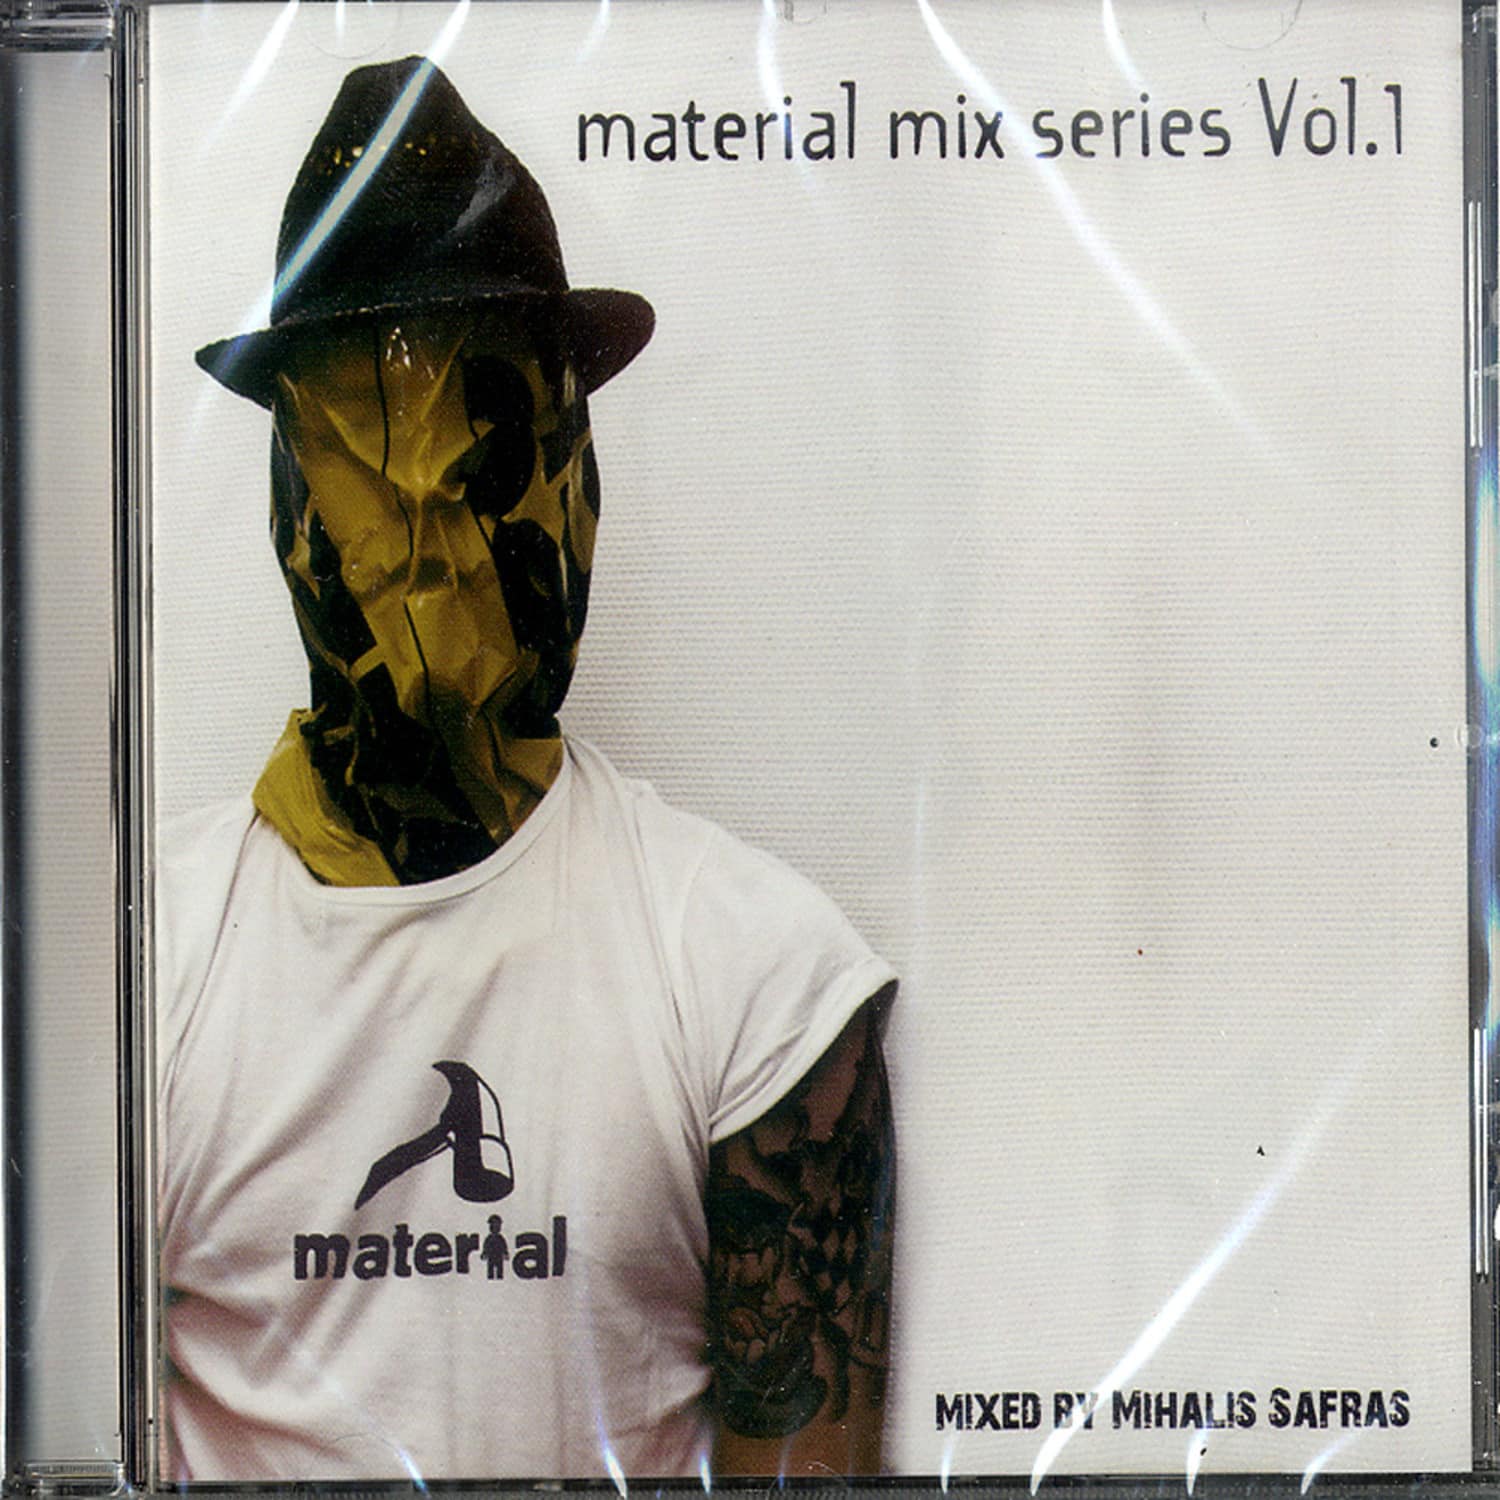 V/A mixed by Mihalis Safras - MATERIAL MIX SERIES VOL. 1 